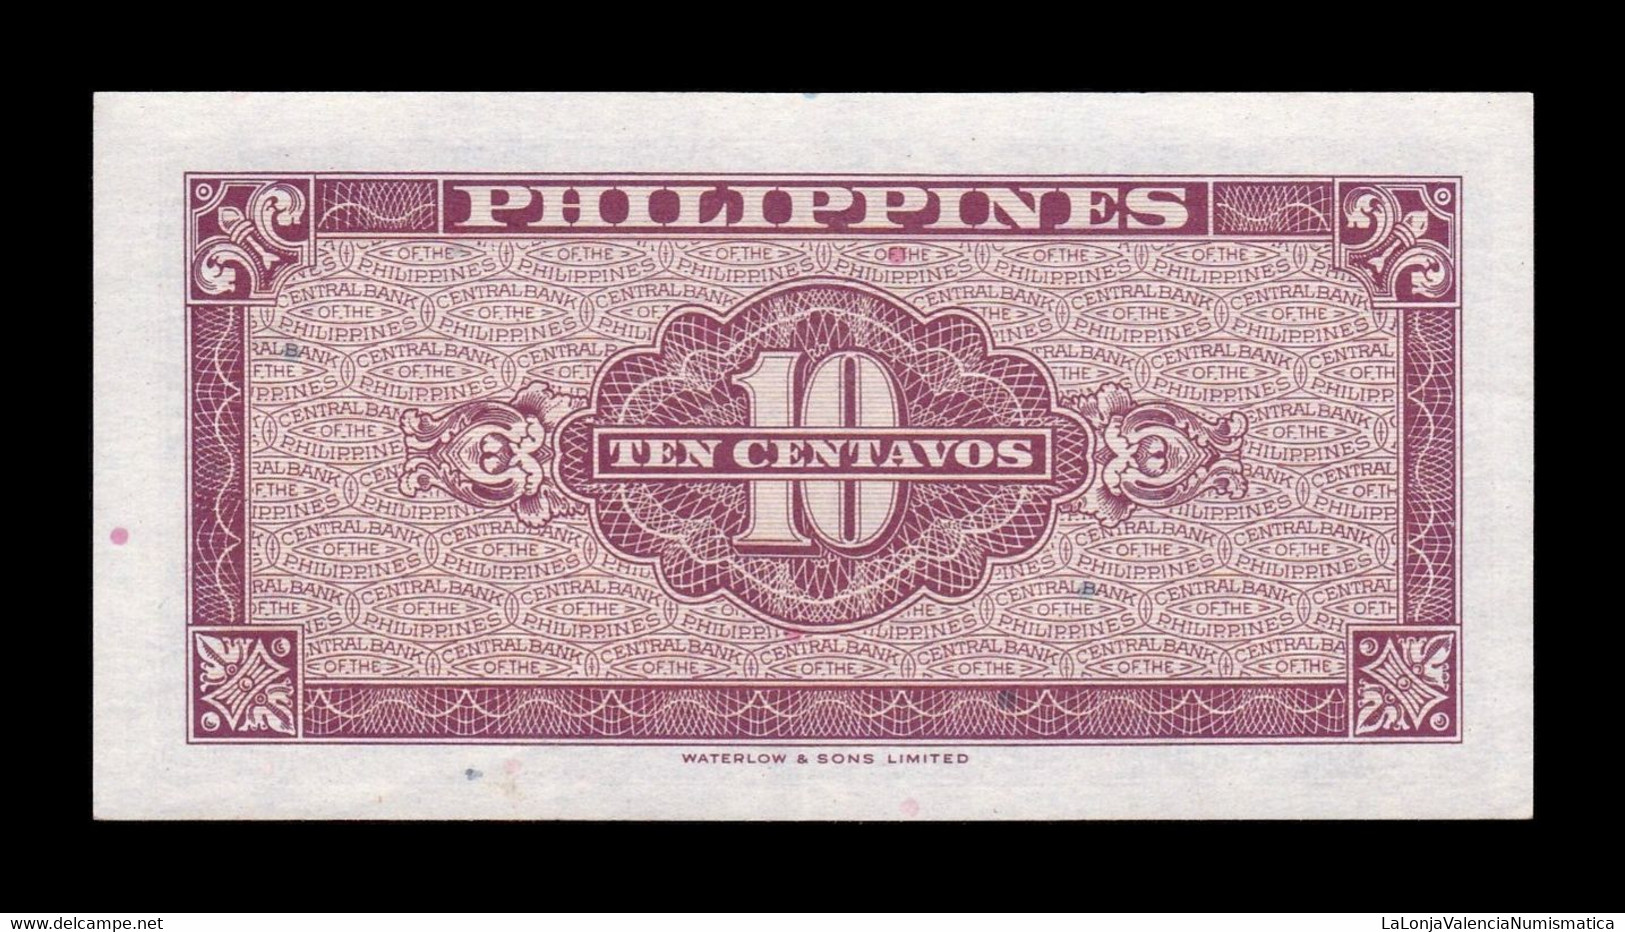 Filipinas Philippines 10 Centavos ND (1949) Pick 128 SC UNC - Philippines